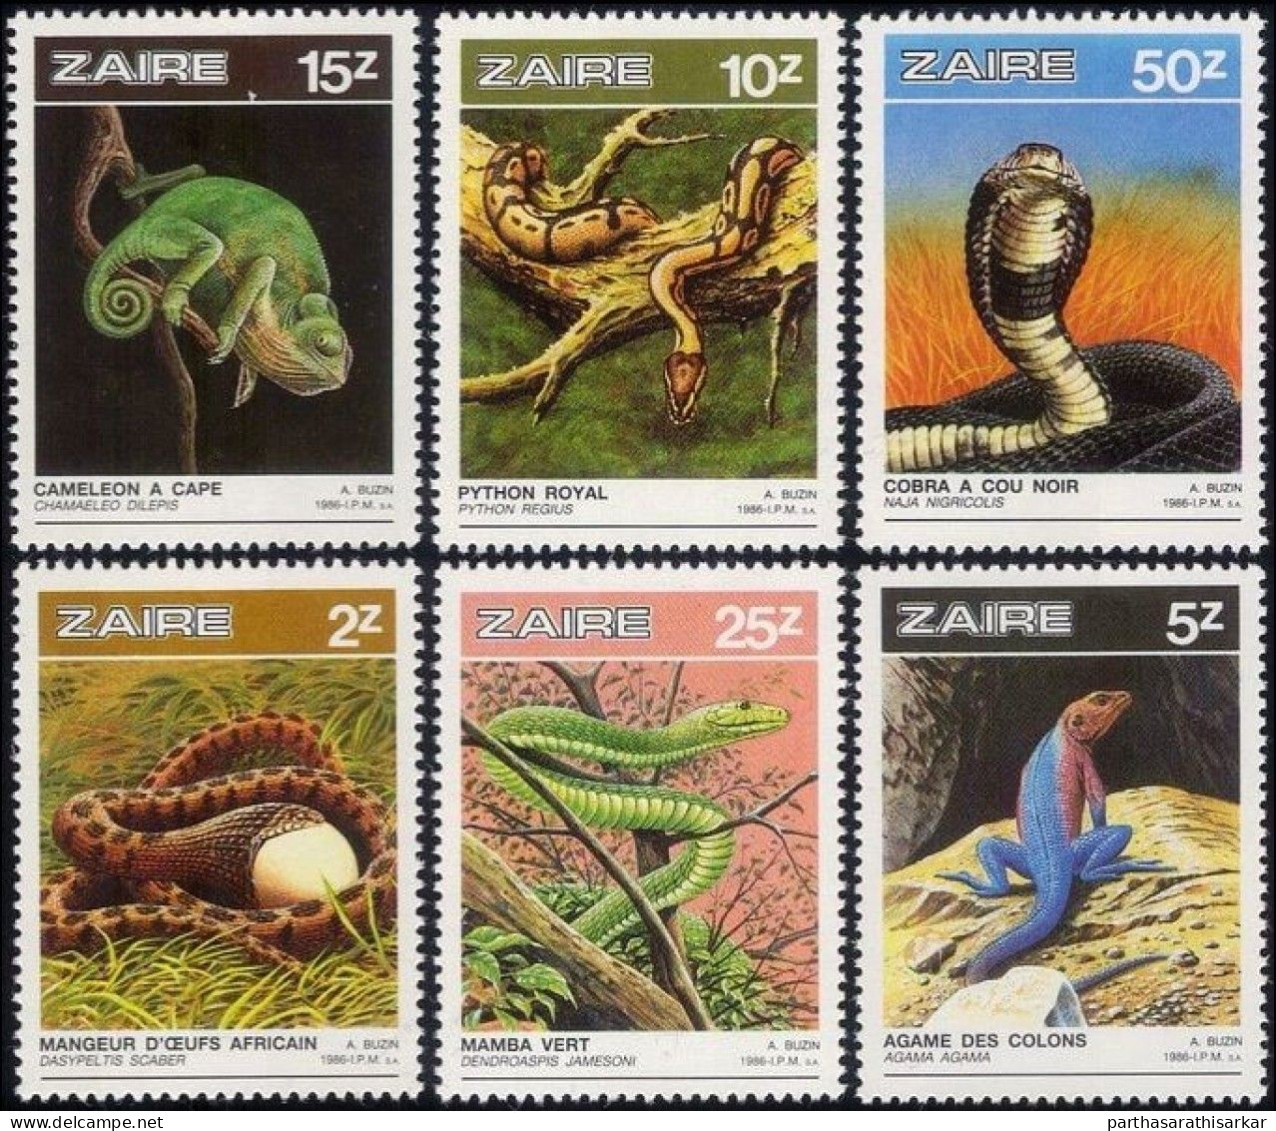 ZAIRE 1986 REPTILES SNAKES LIZARDS NATURE WILDLIFE COMPLETE SET MNH - Serpientes